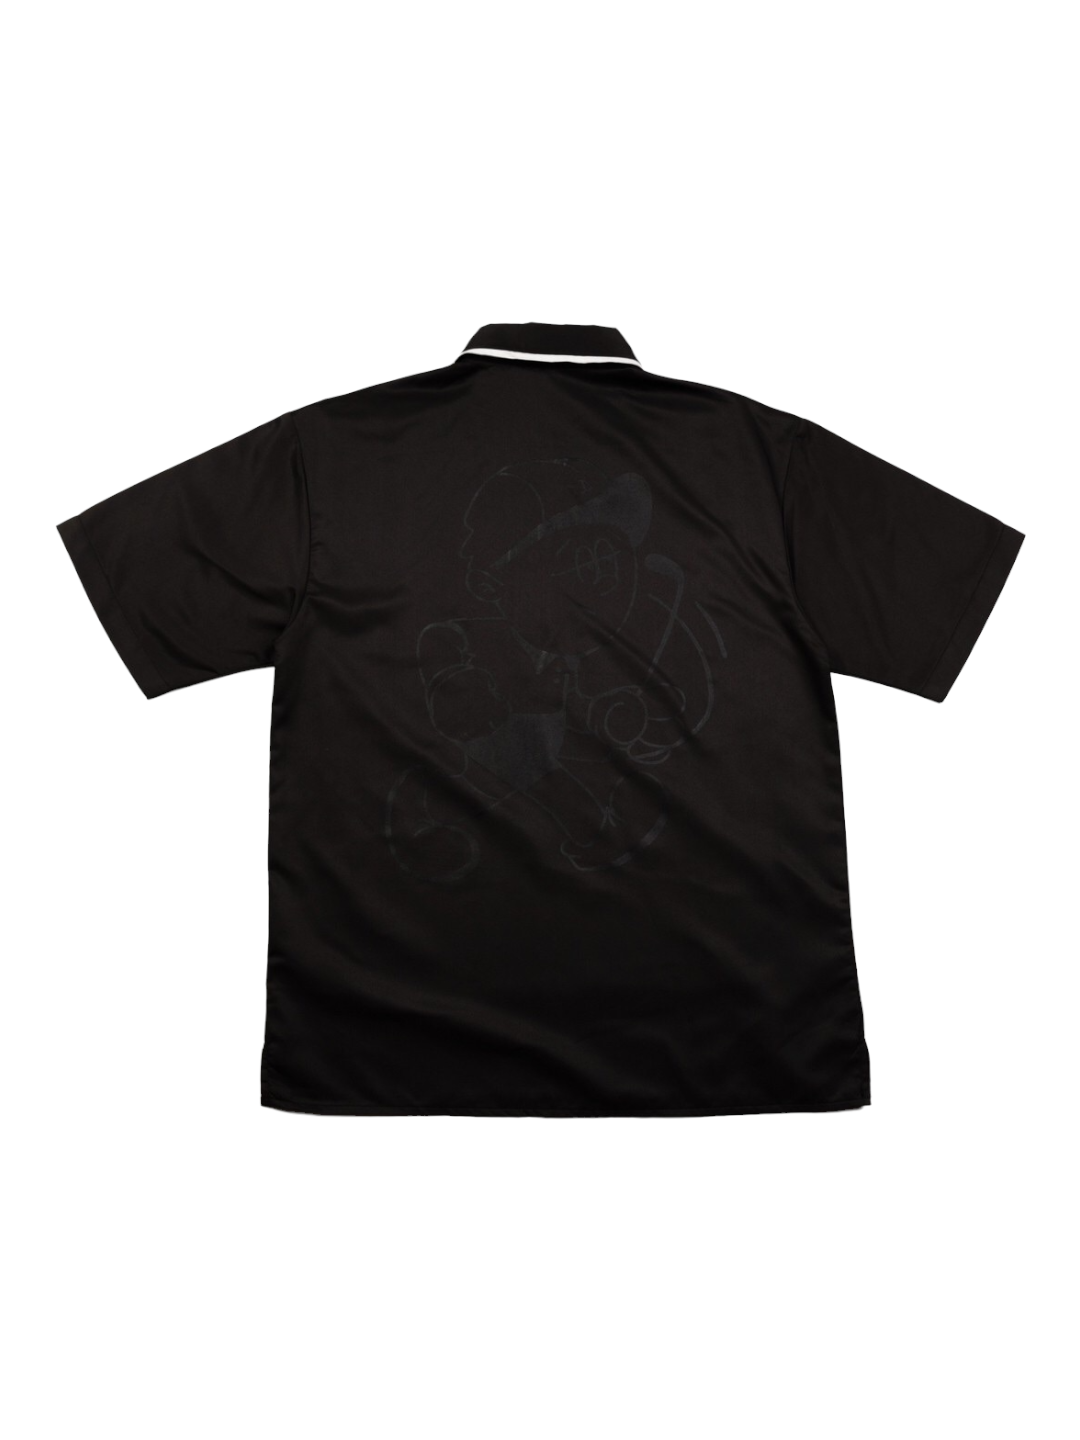 Micro fiber Shirt (Black)